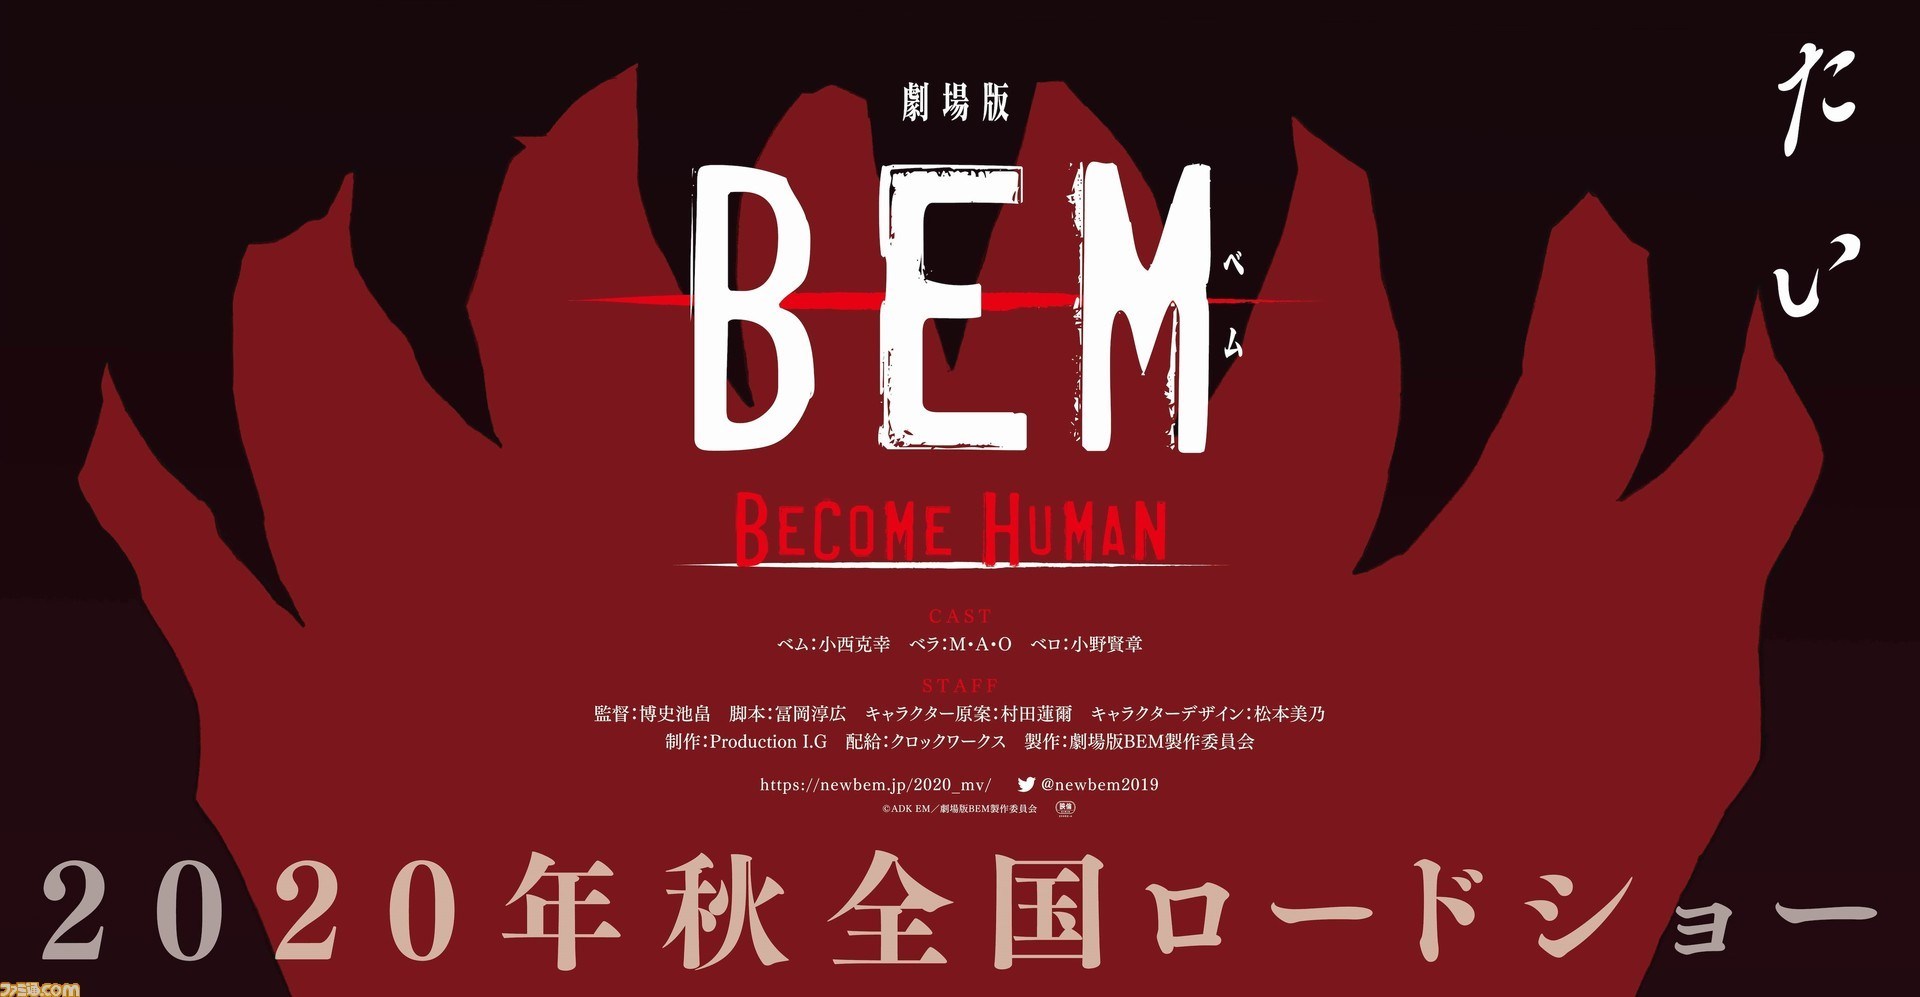 bem movie become human walkthrough